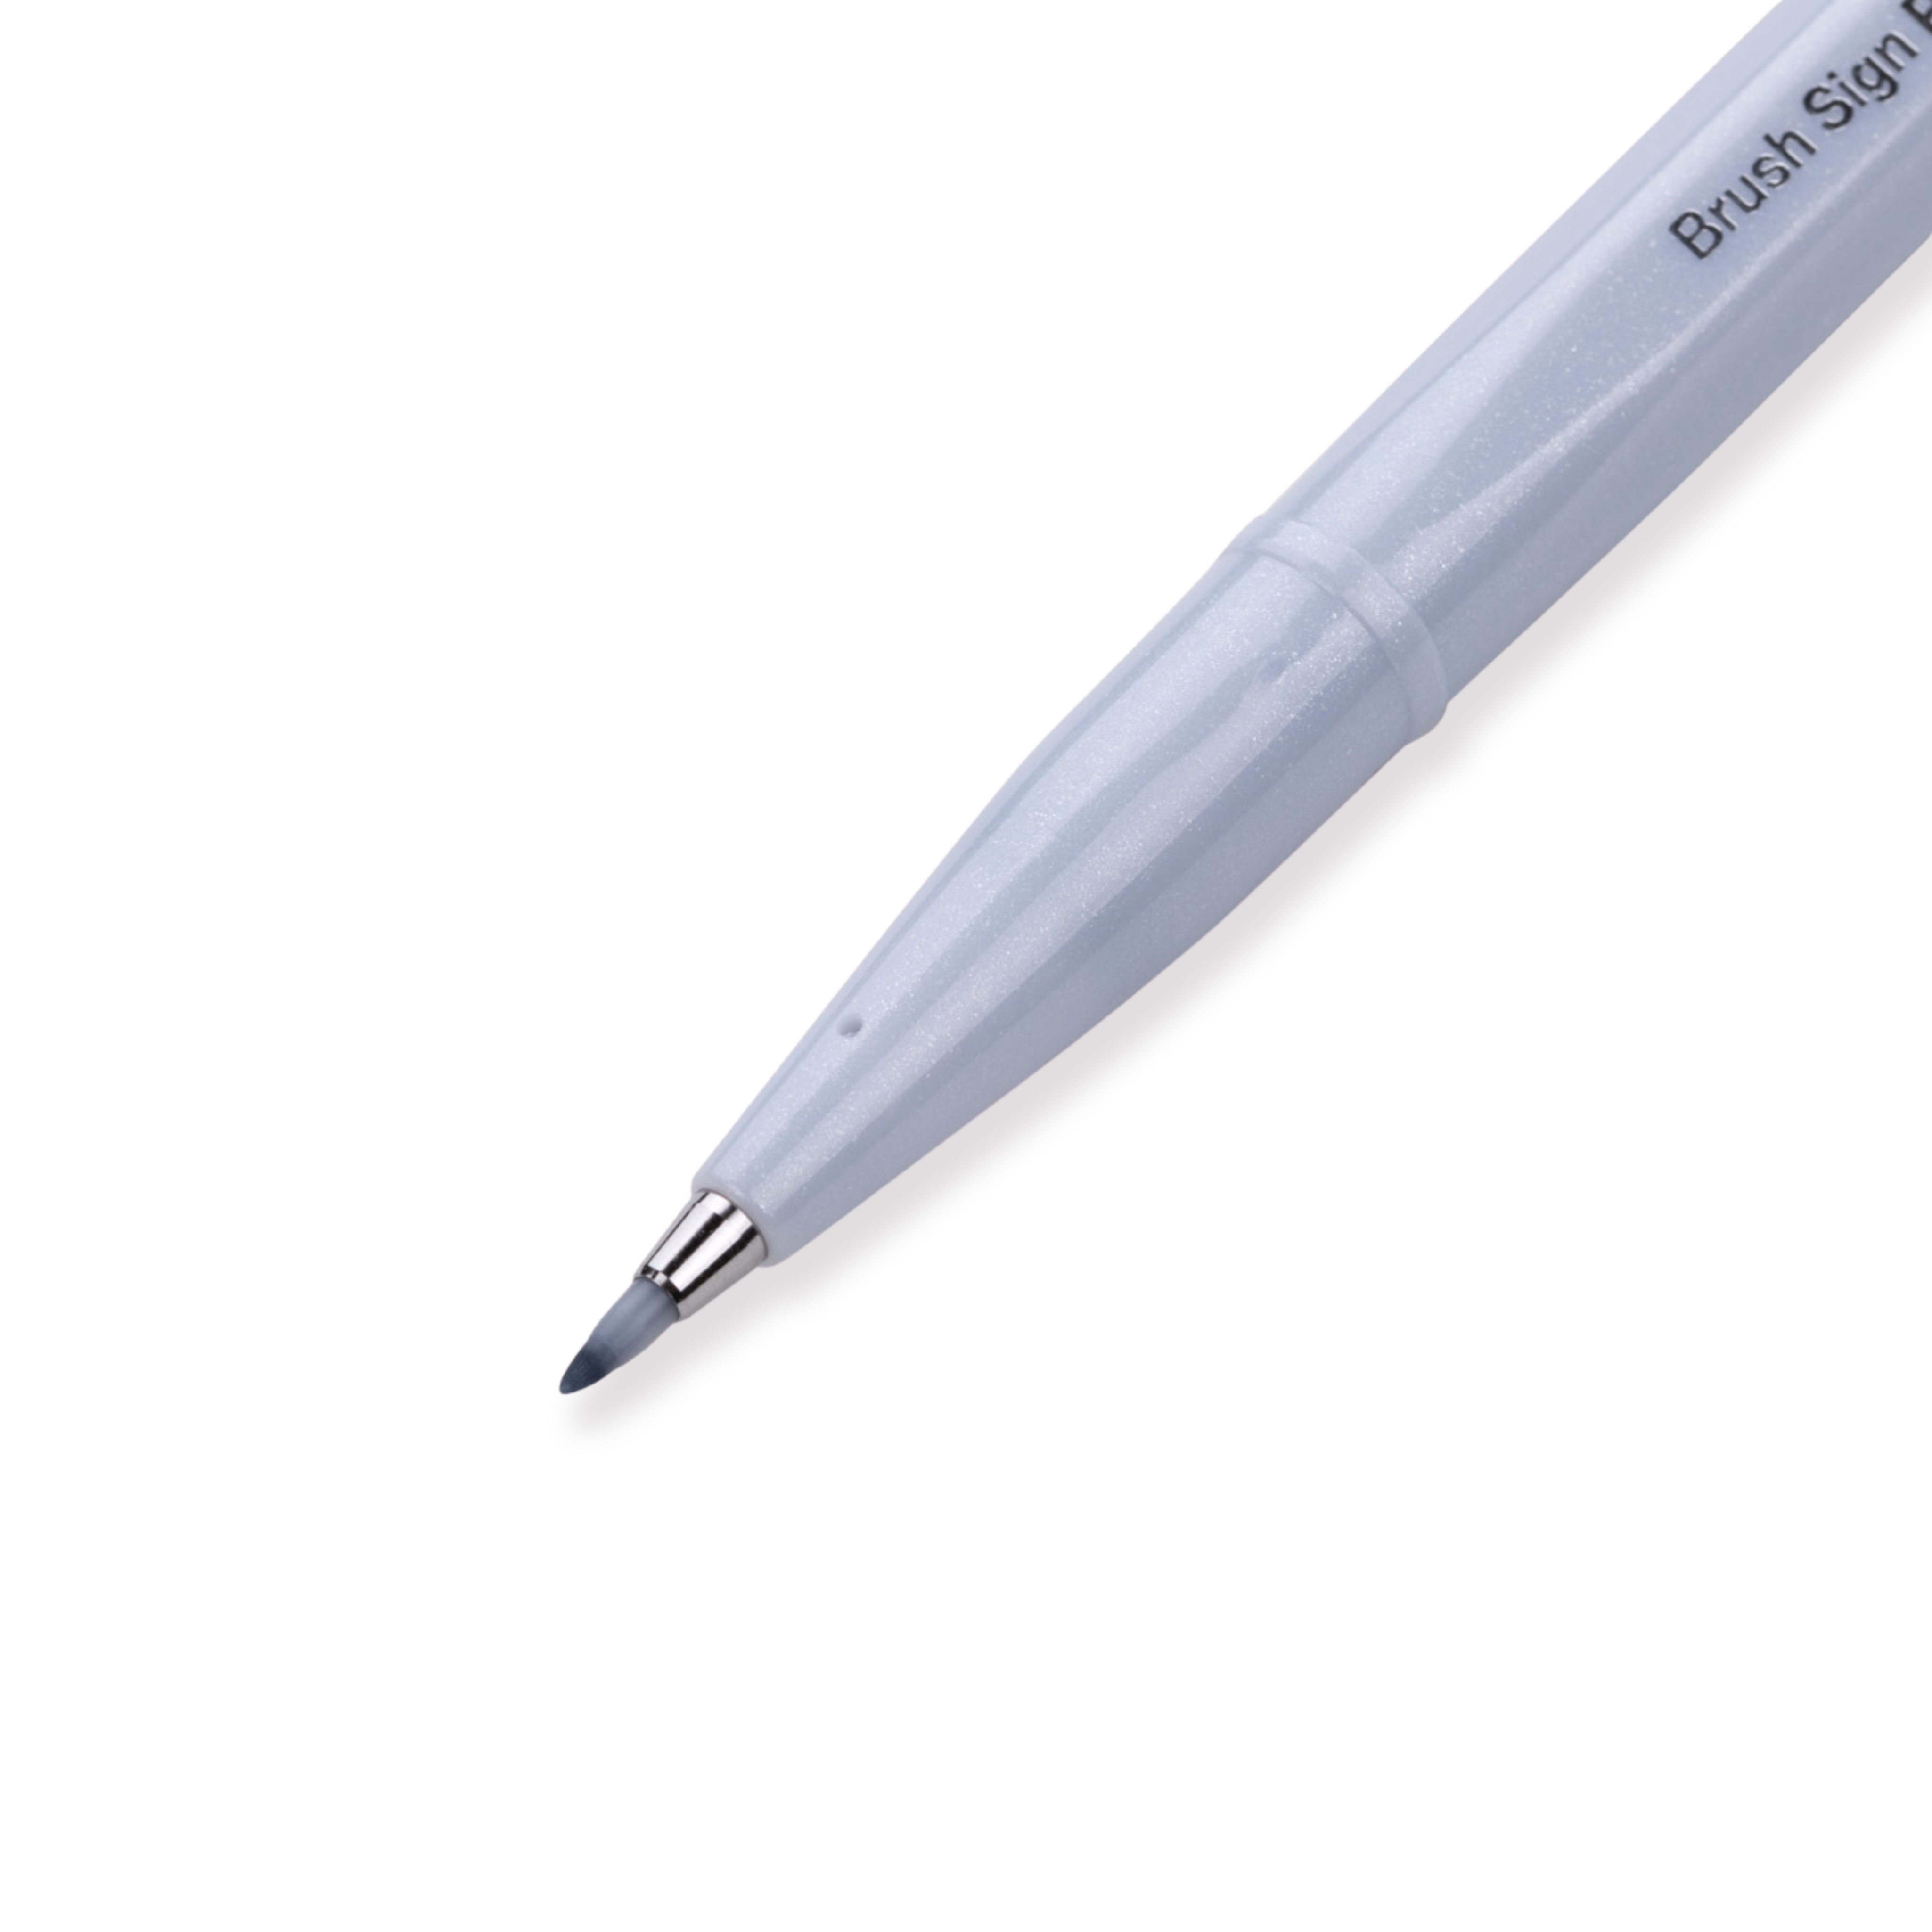 Pentel Fude Touch Brush Sign Pen - Gris claro - 2020 nuevos colores